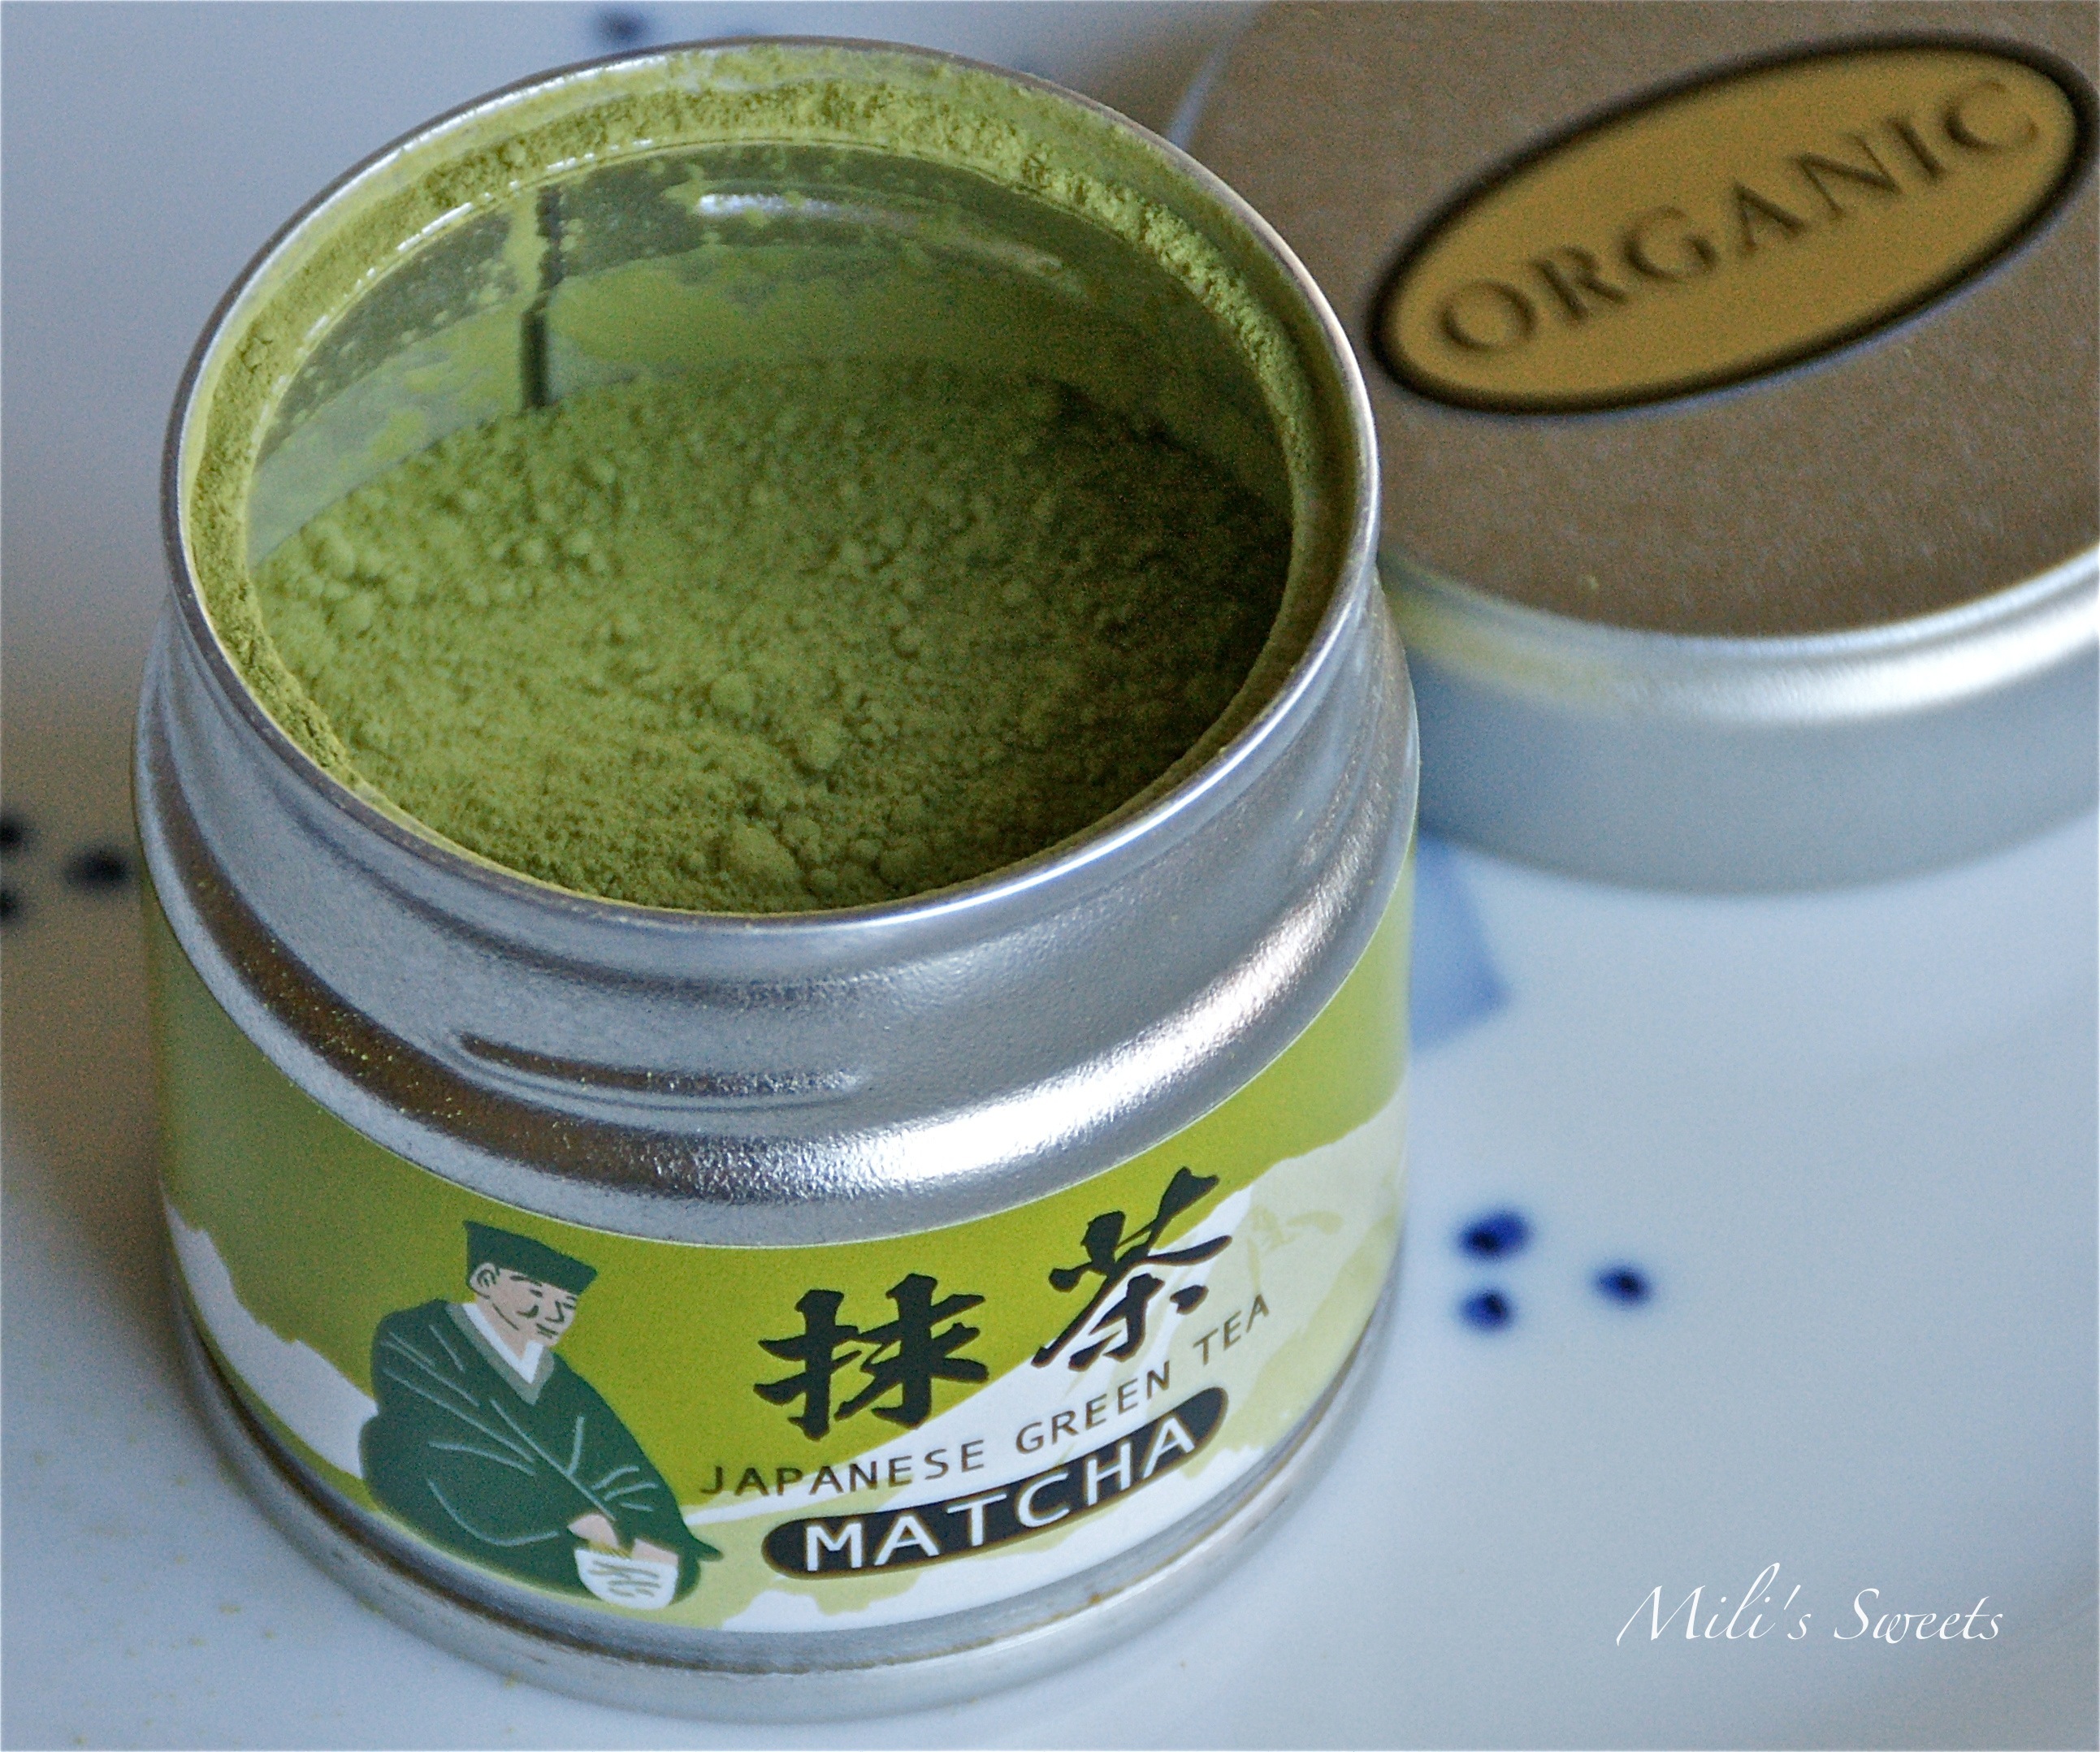 matcha green tea - mili's sweets ingredients 